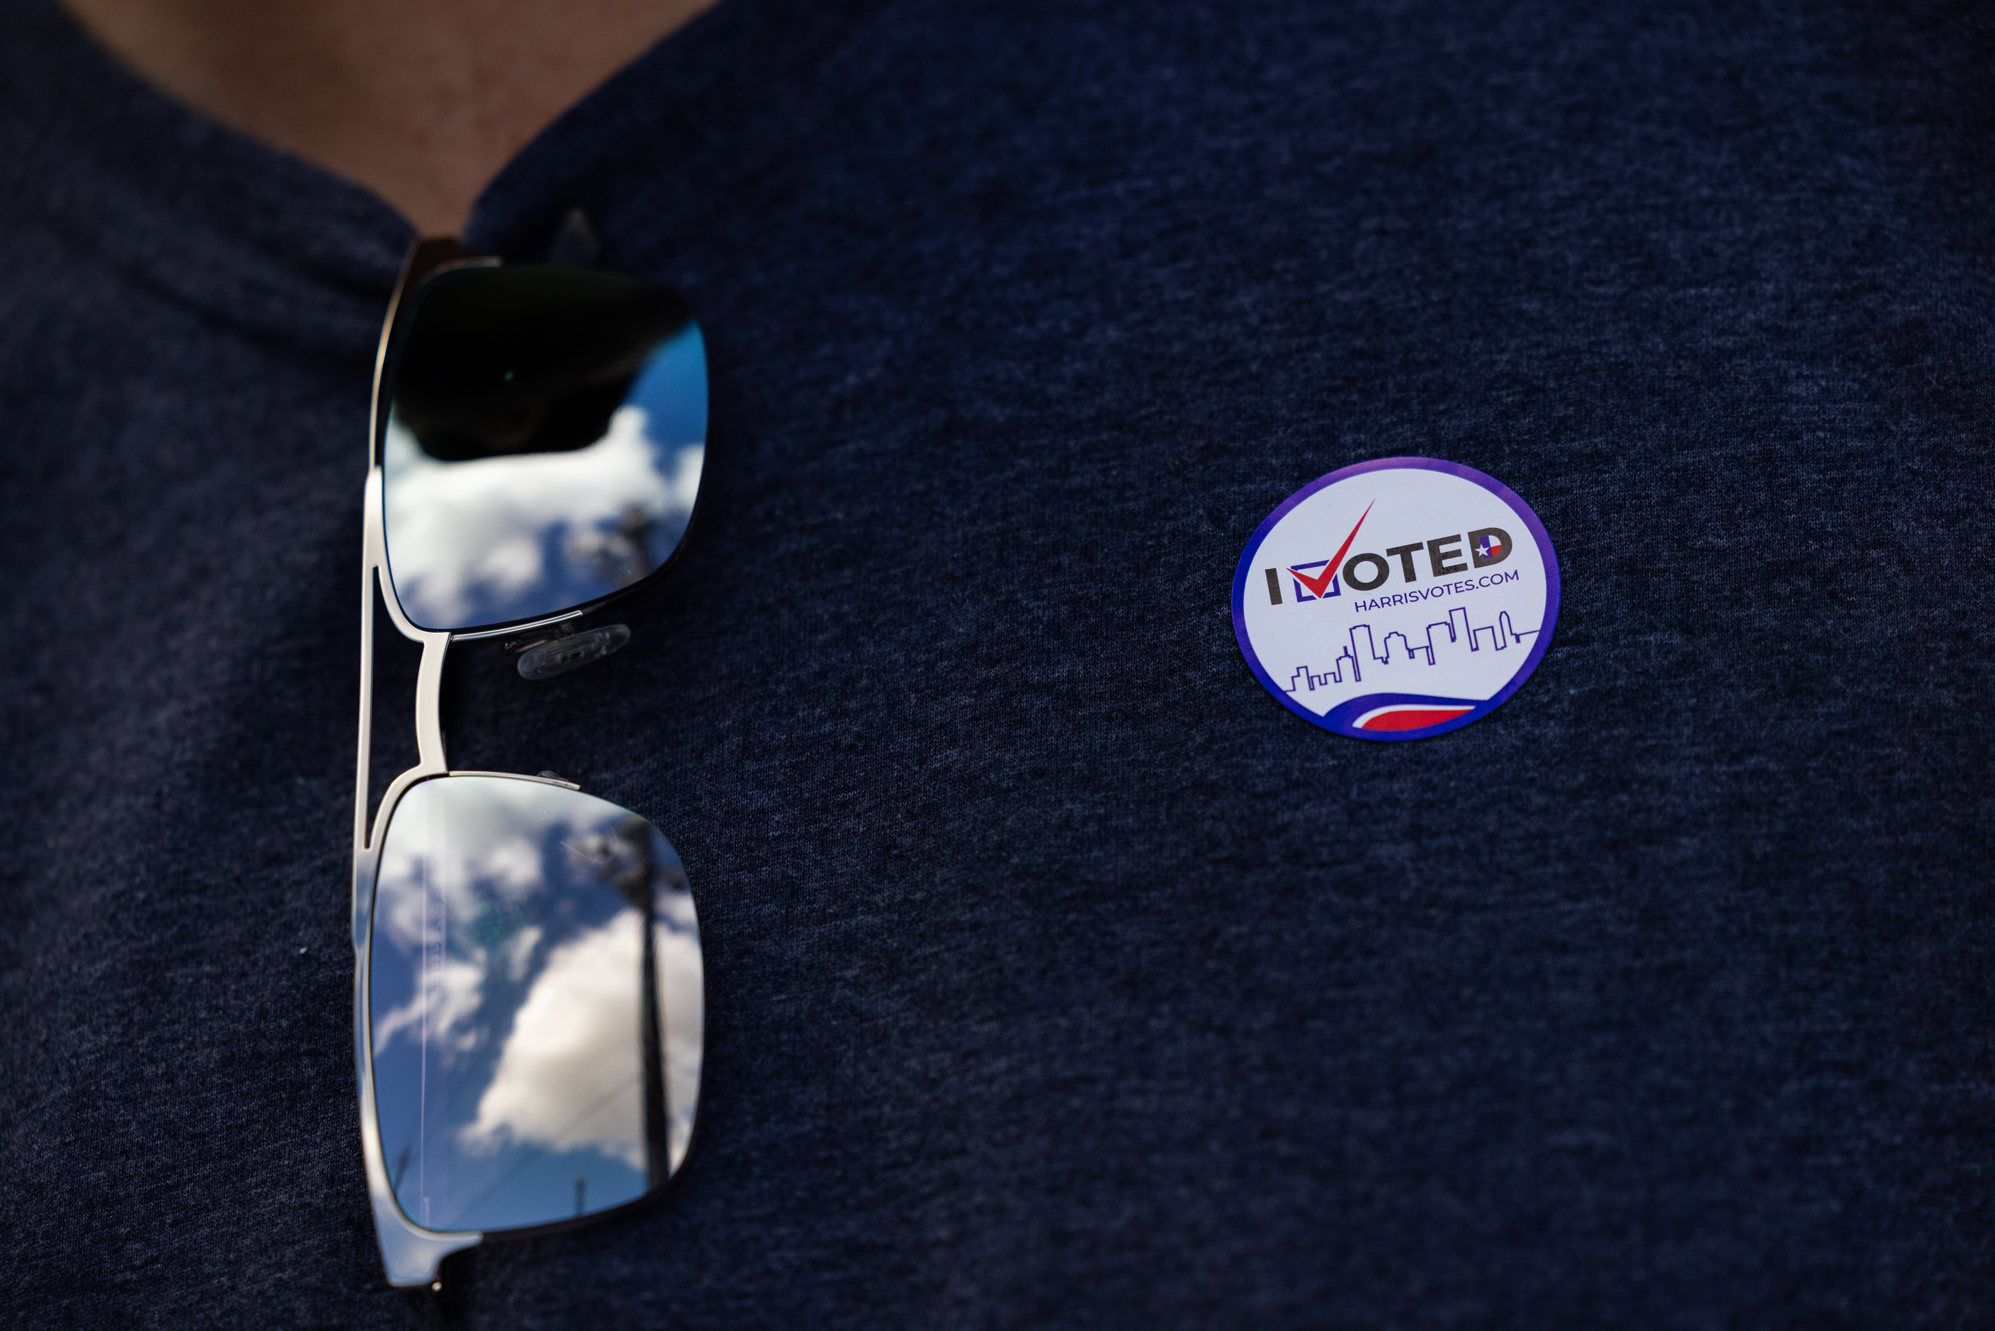 “I Voted” election sticker,